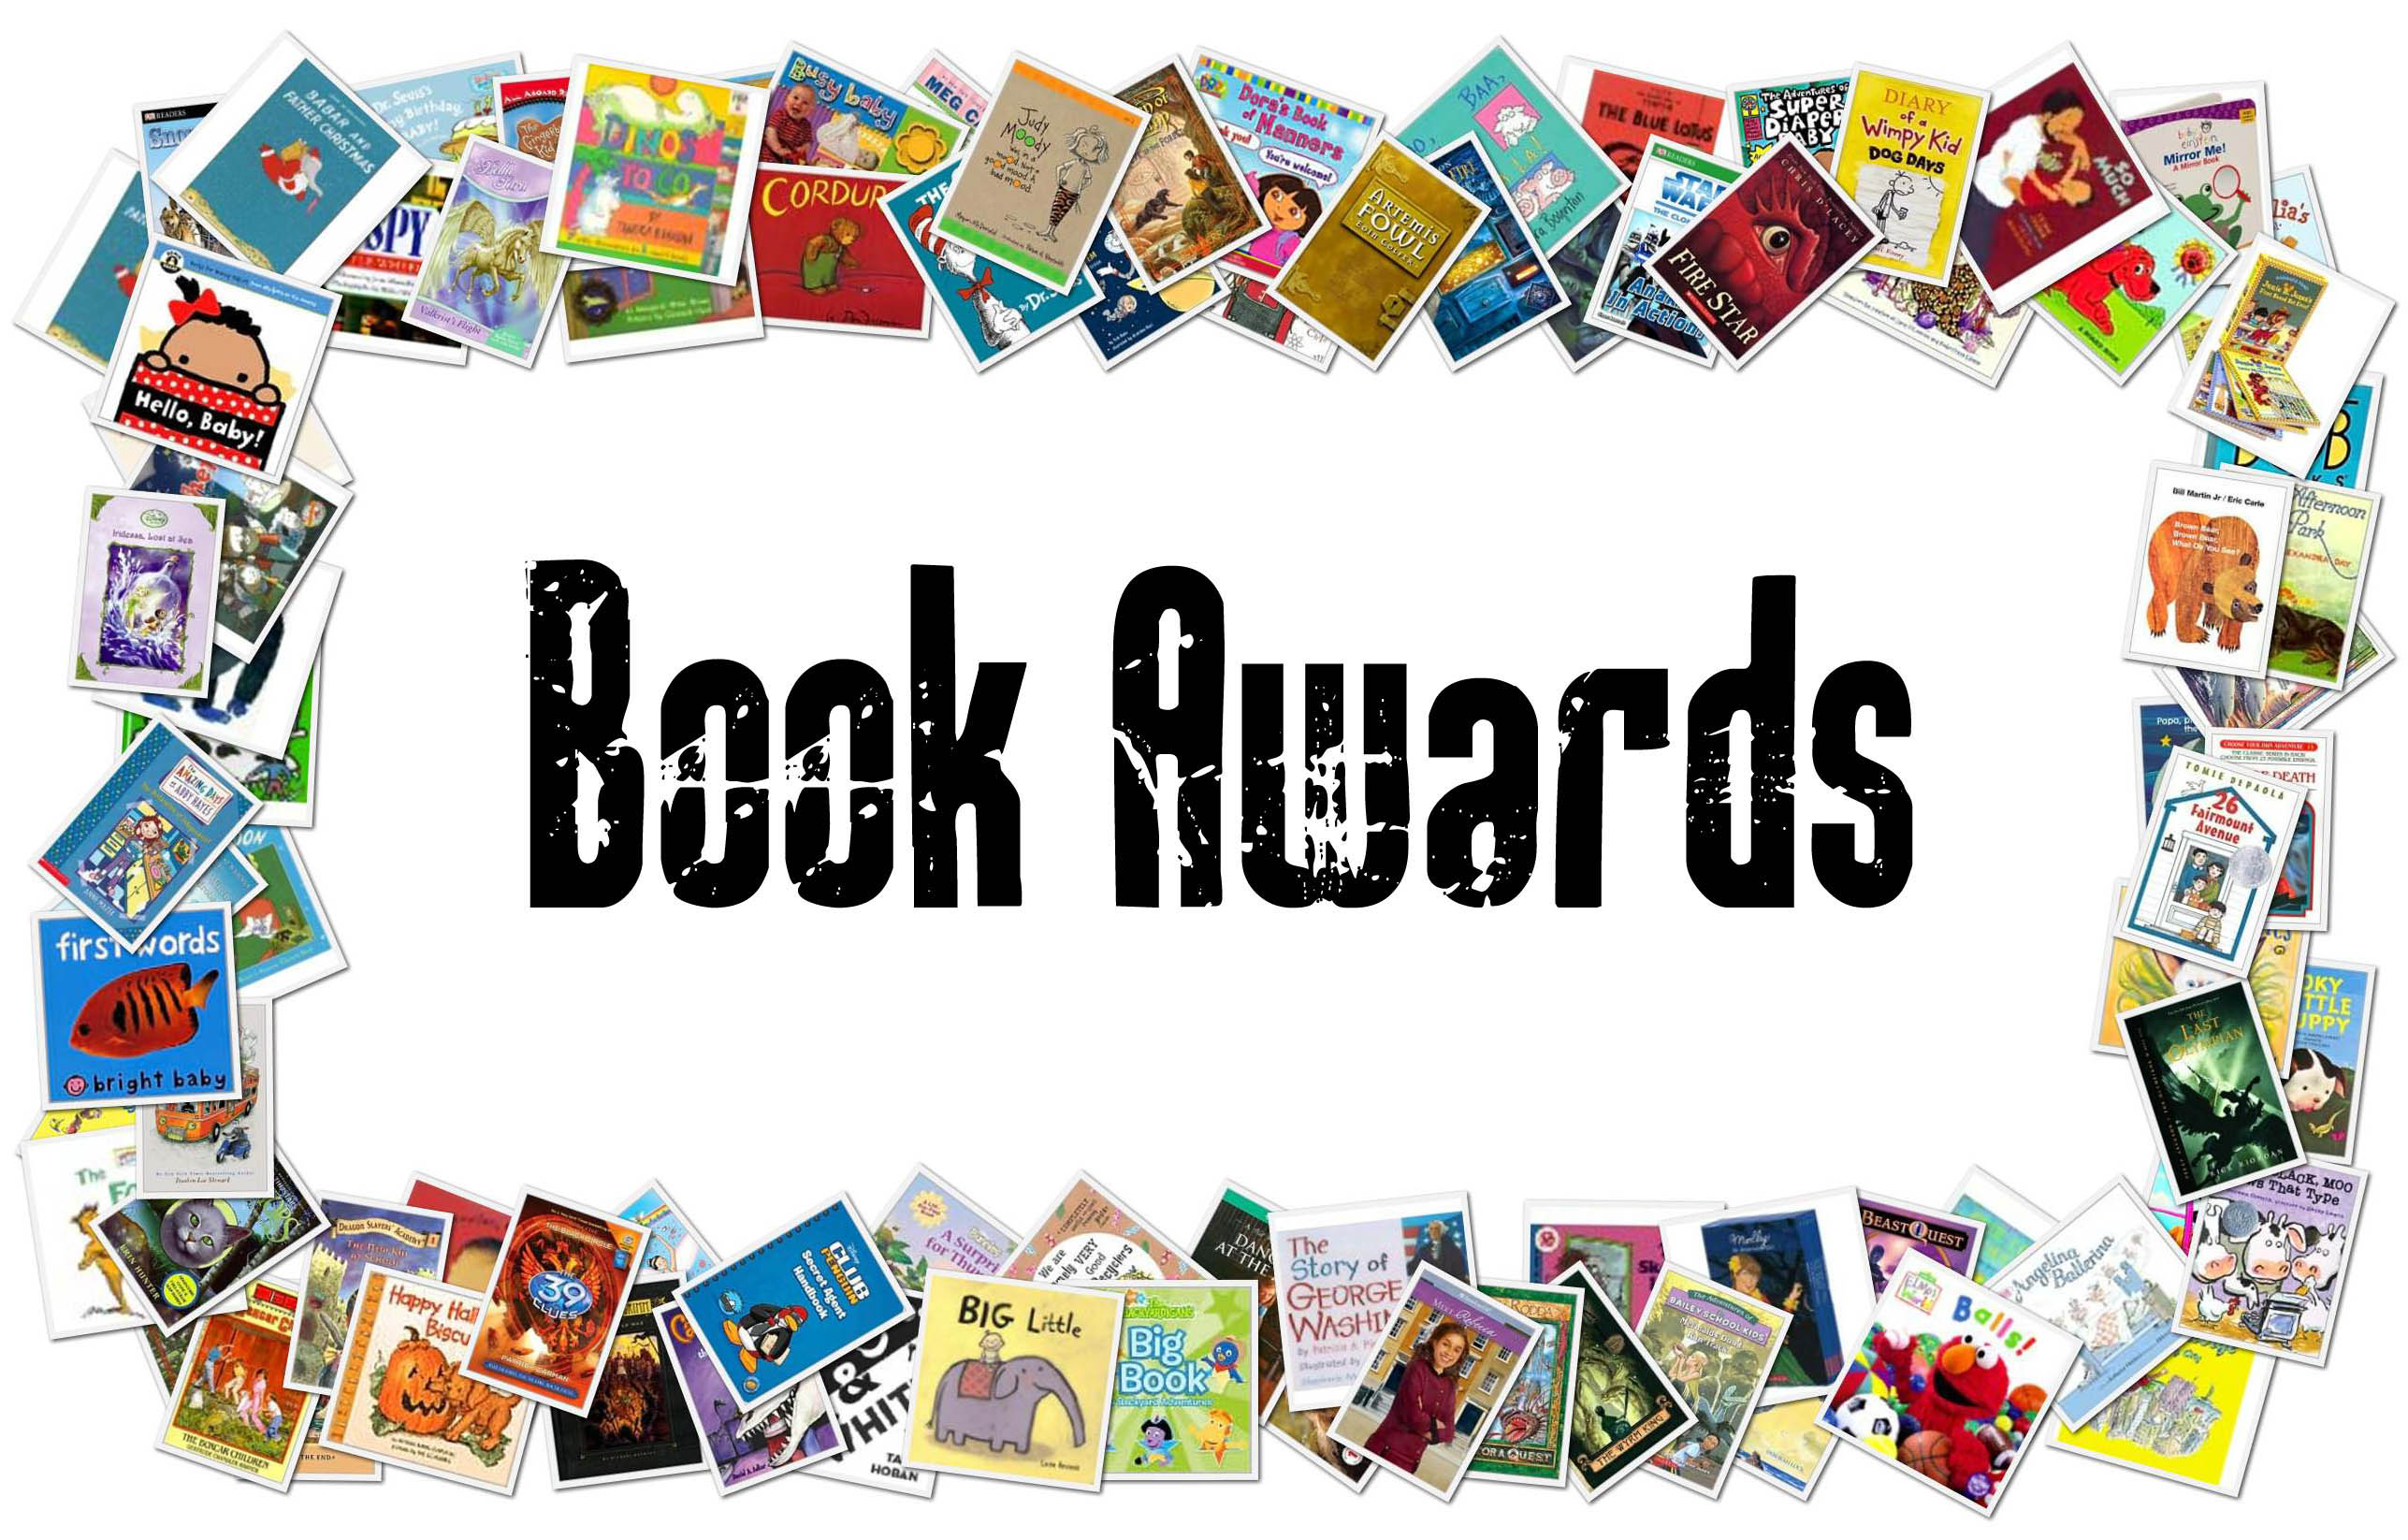 Jared Brett's 2014 Best Book Awards